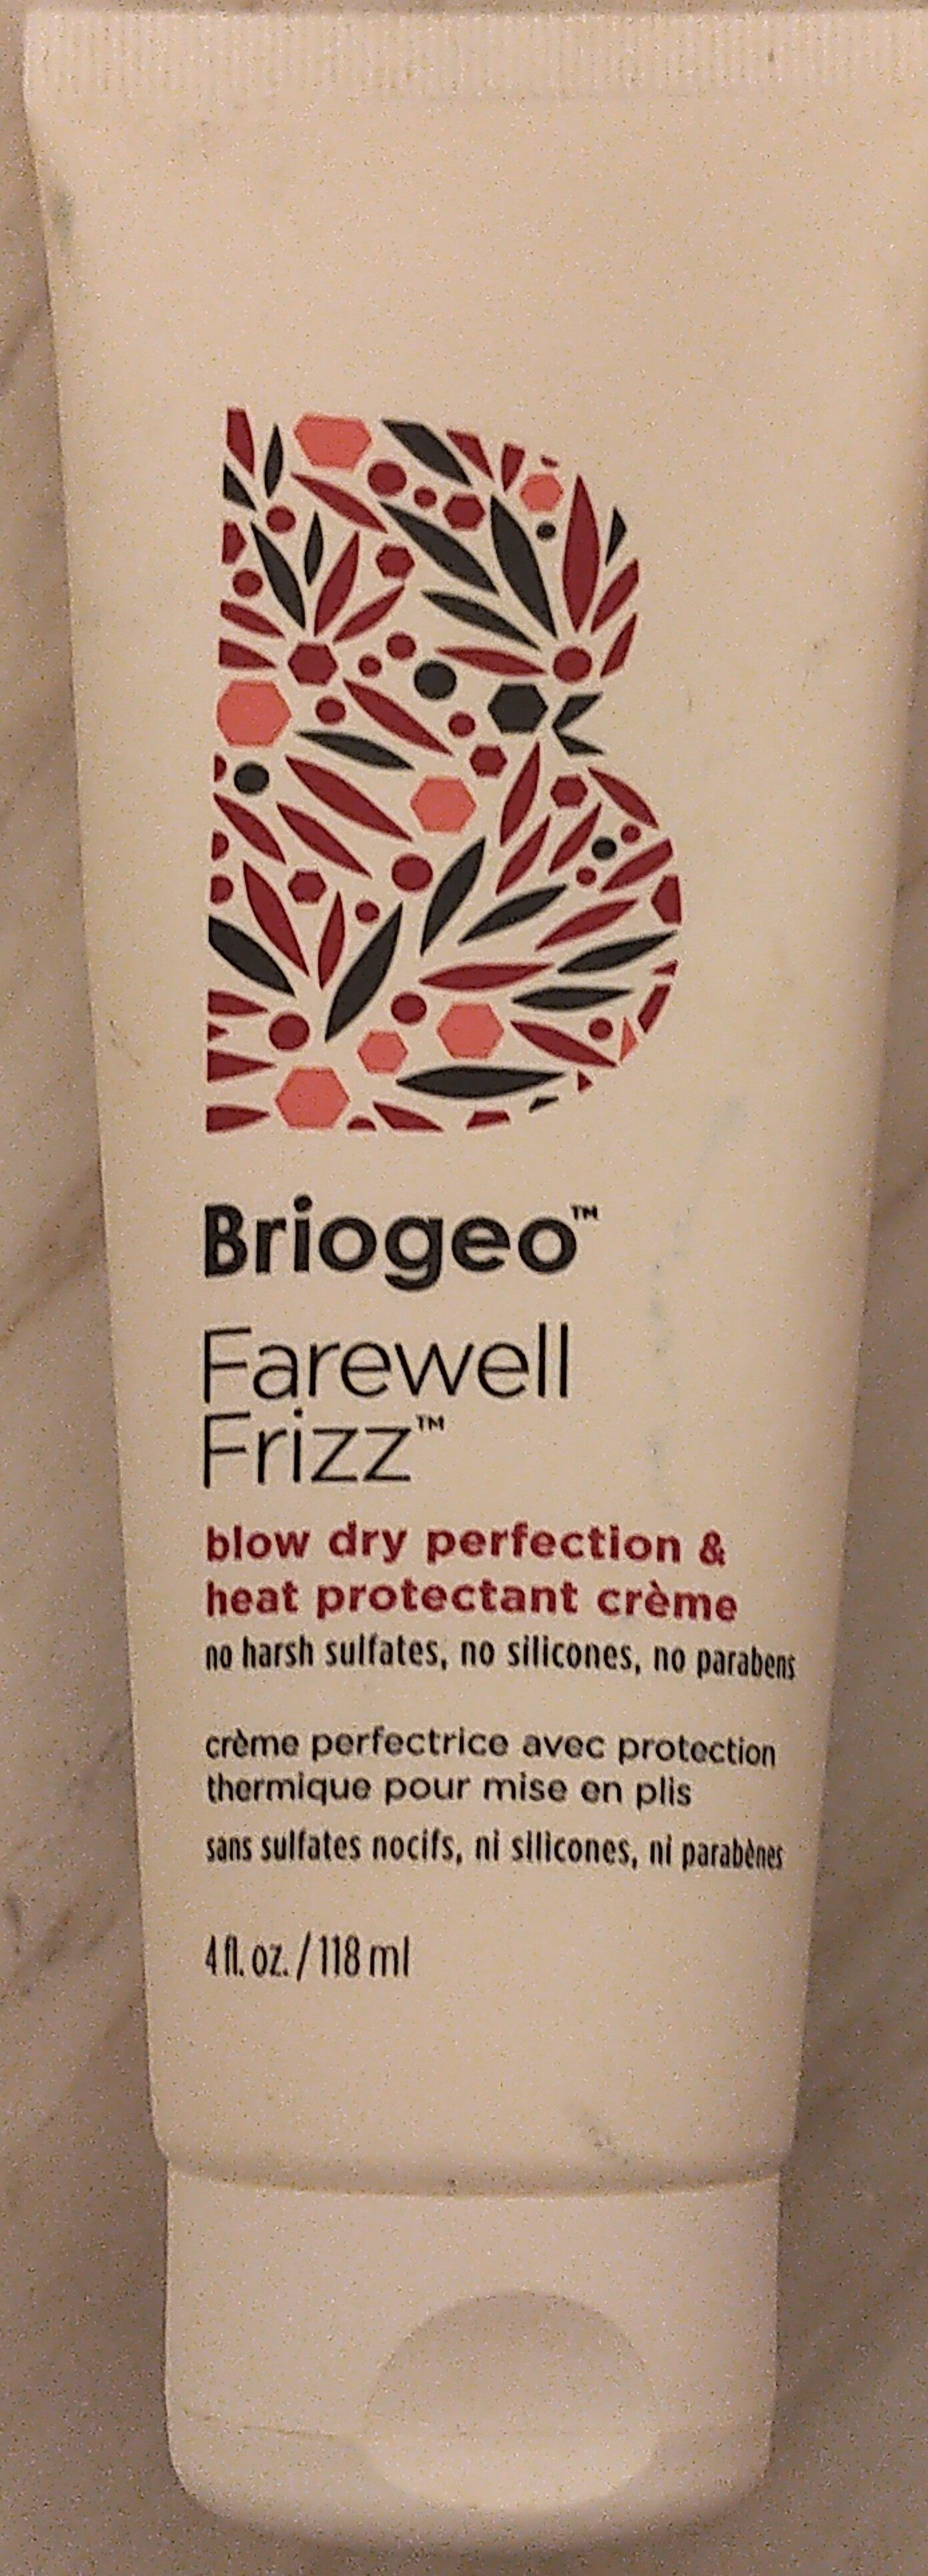 Briogeo Farewell Frizz Blow Dry Perfection & Heat Protectant Crème - Produkto - en